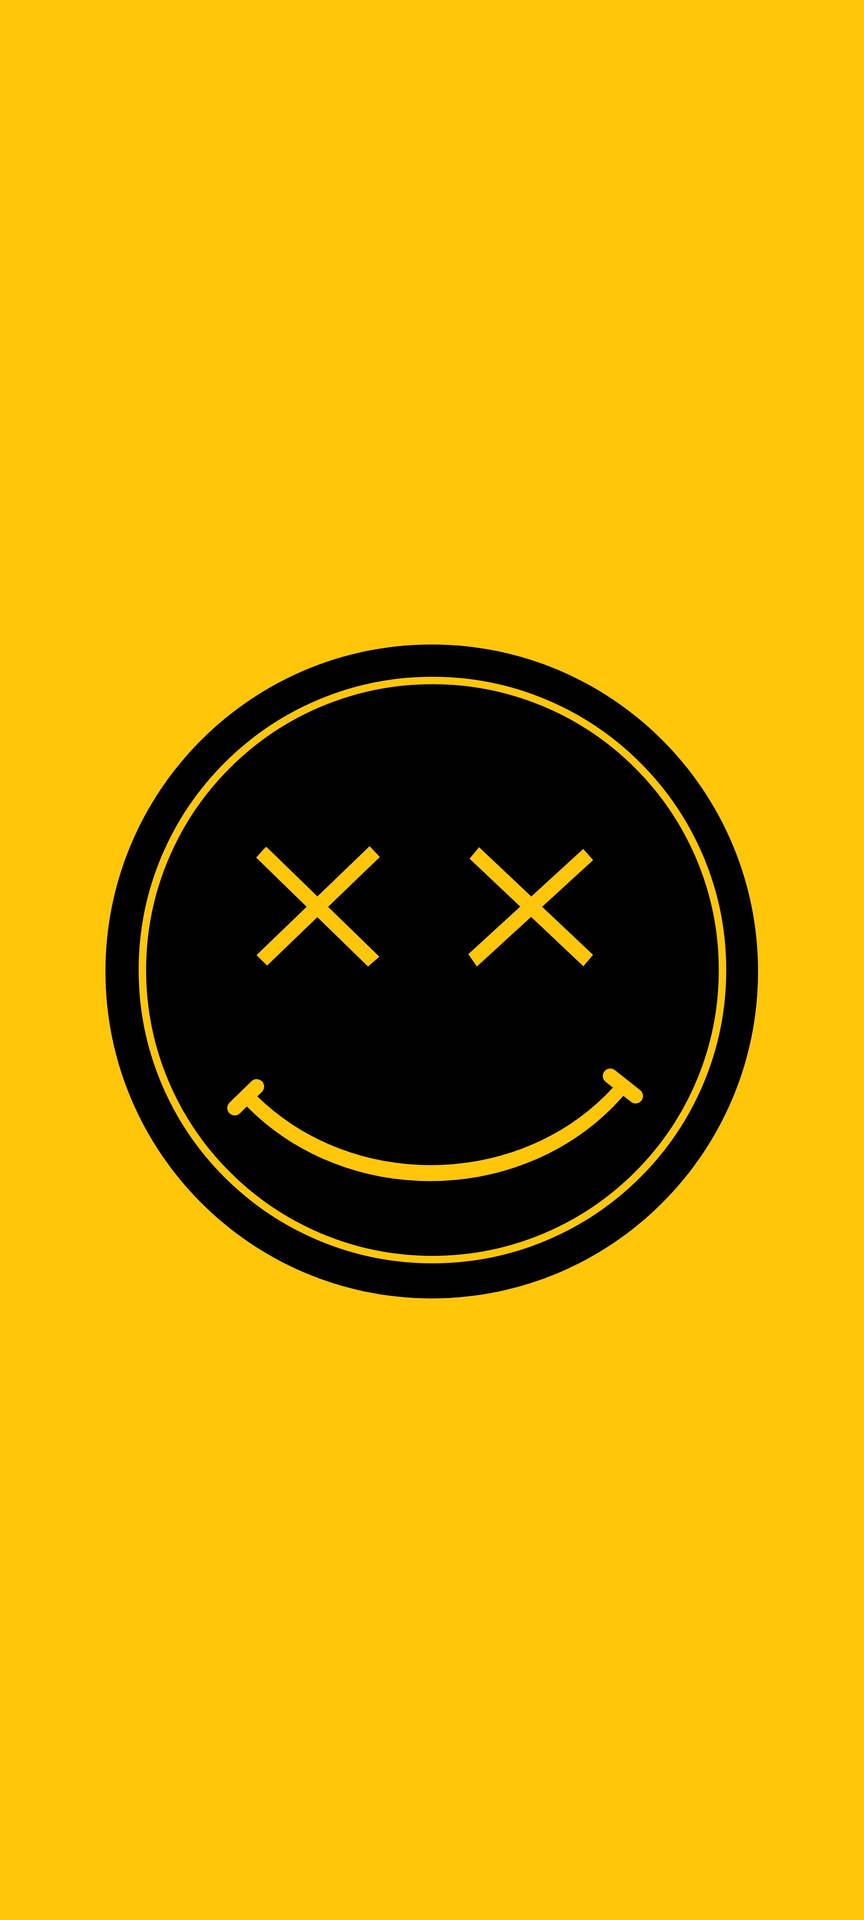 Dead Smile Plain Yellow Iphone Wallpaper